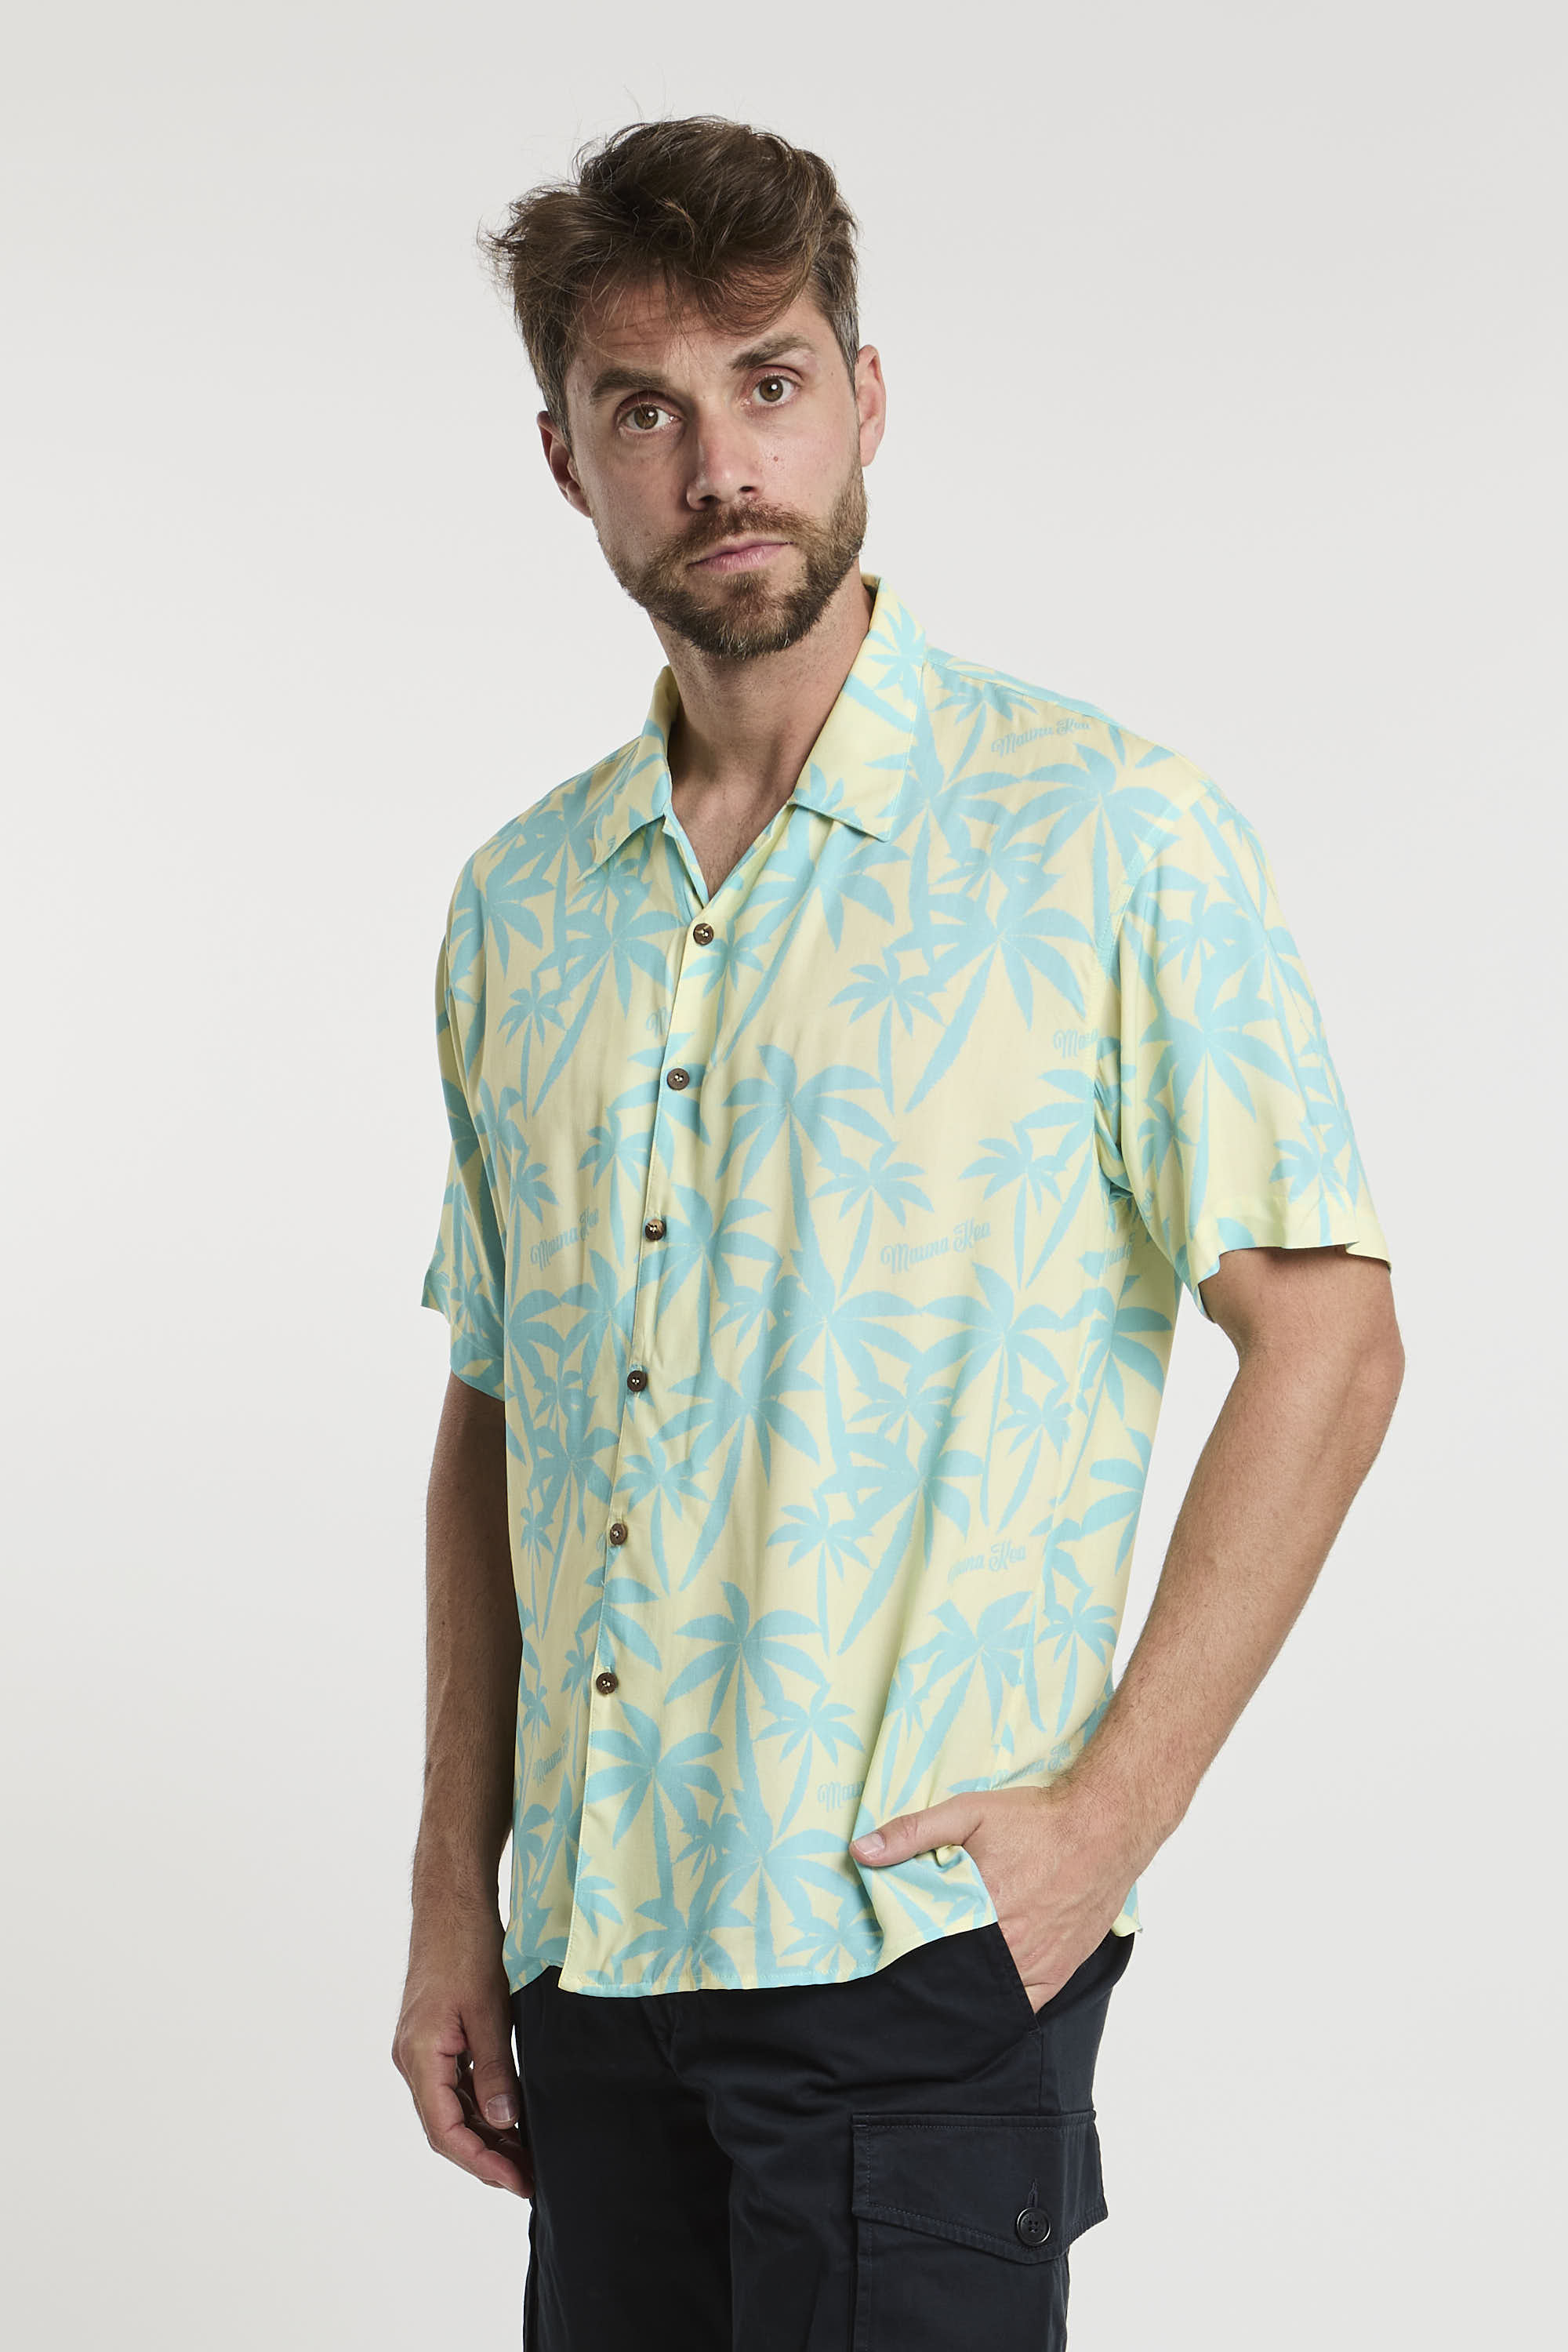 Mauna Kea Printed All Over Viscose Shirt in Yellow-3